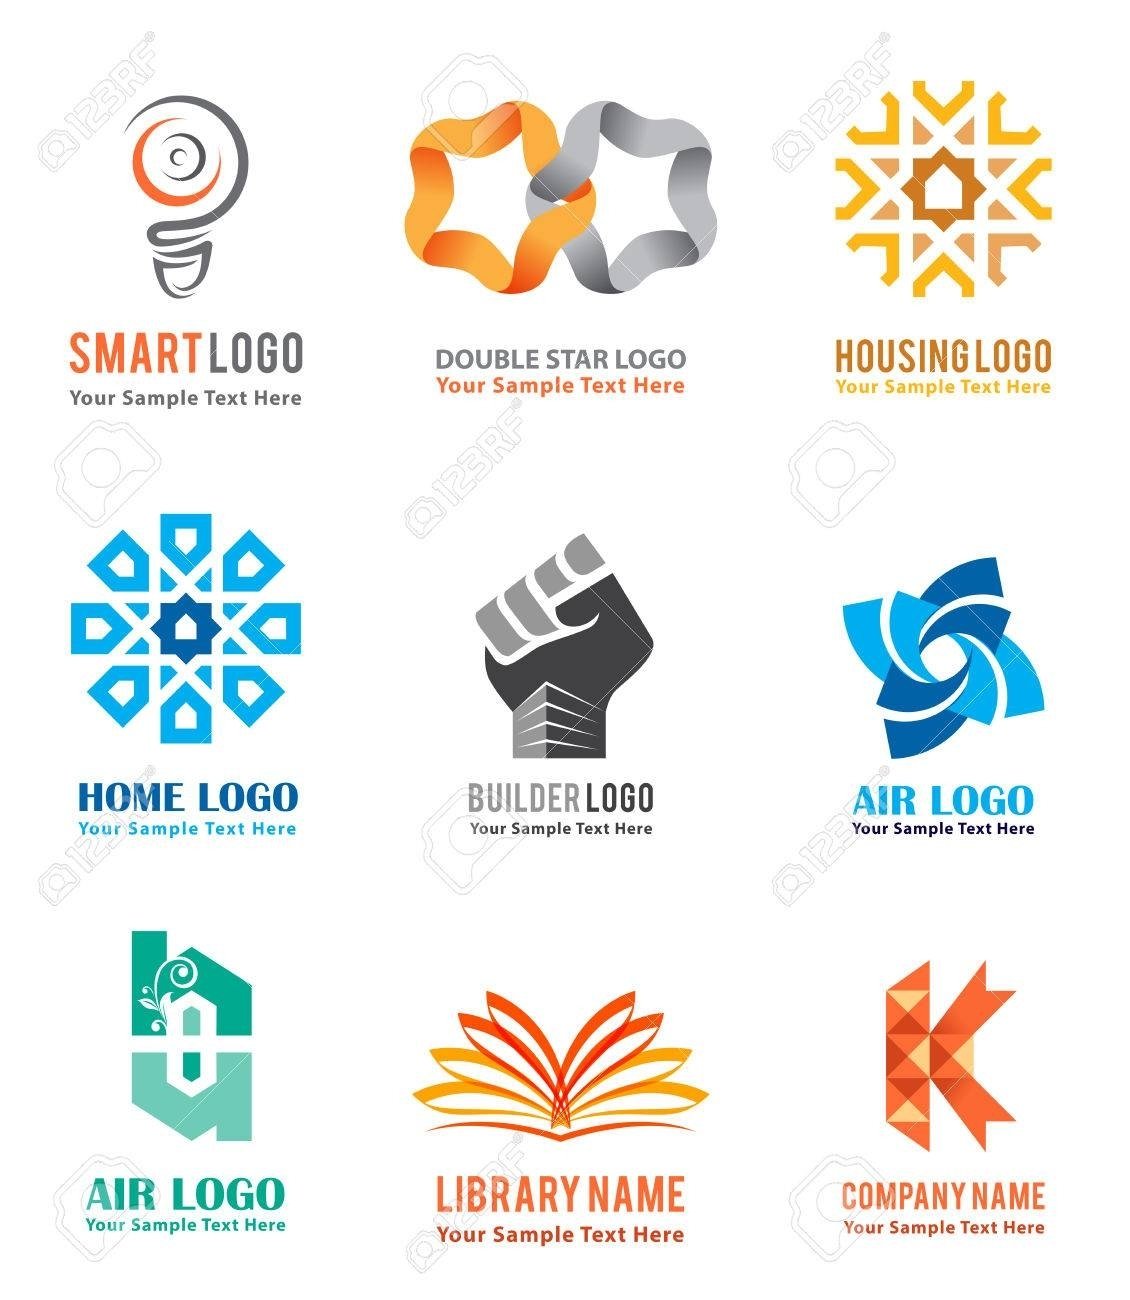 10 Perfect Real Estate Company Name Ideas logo icons set for company identity branding like smart ideas 1 2022